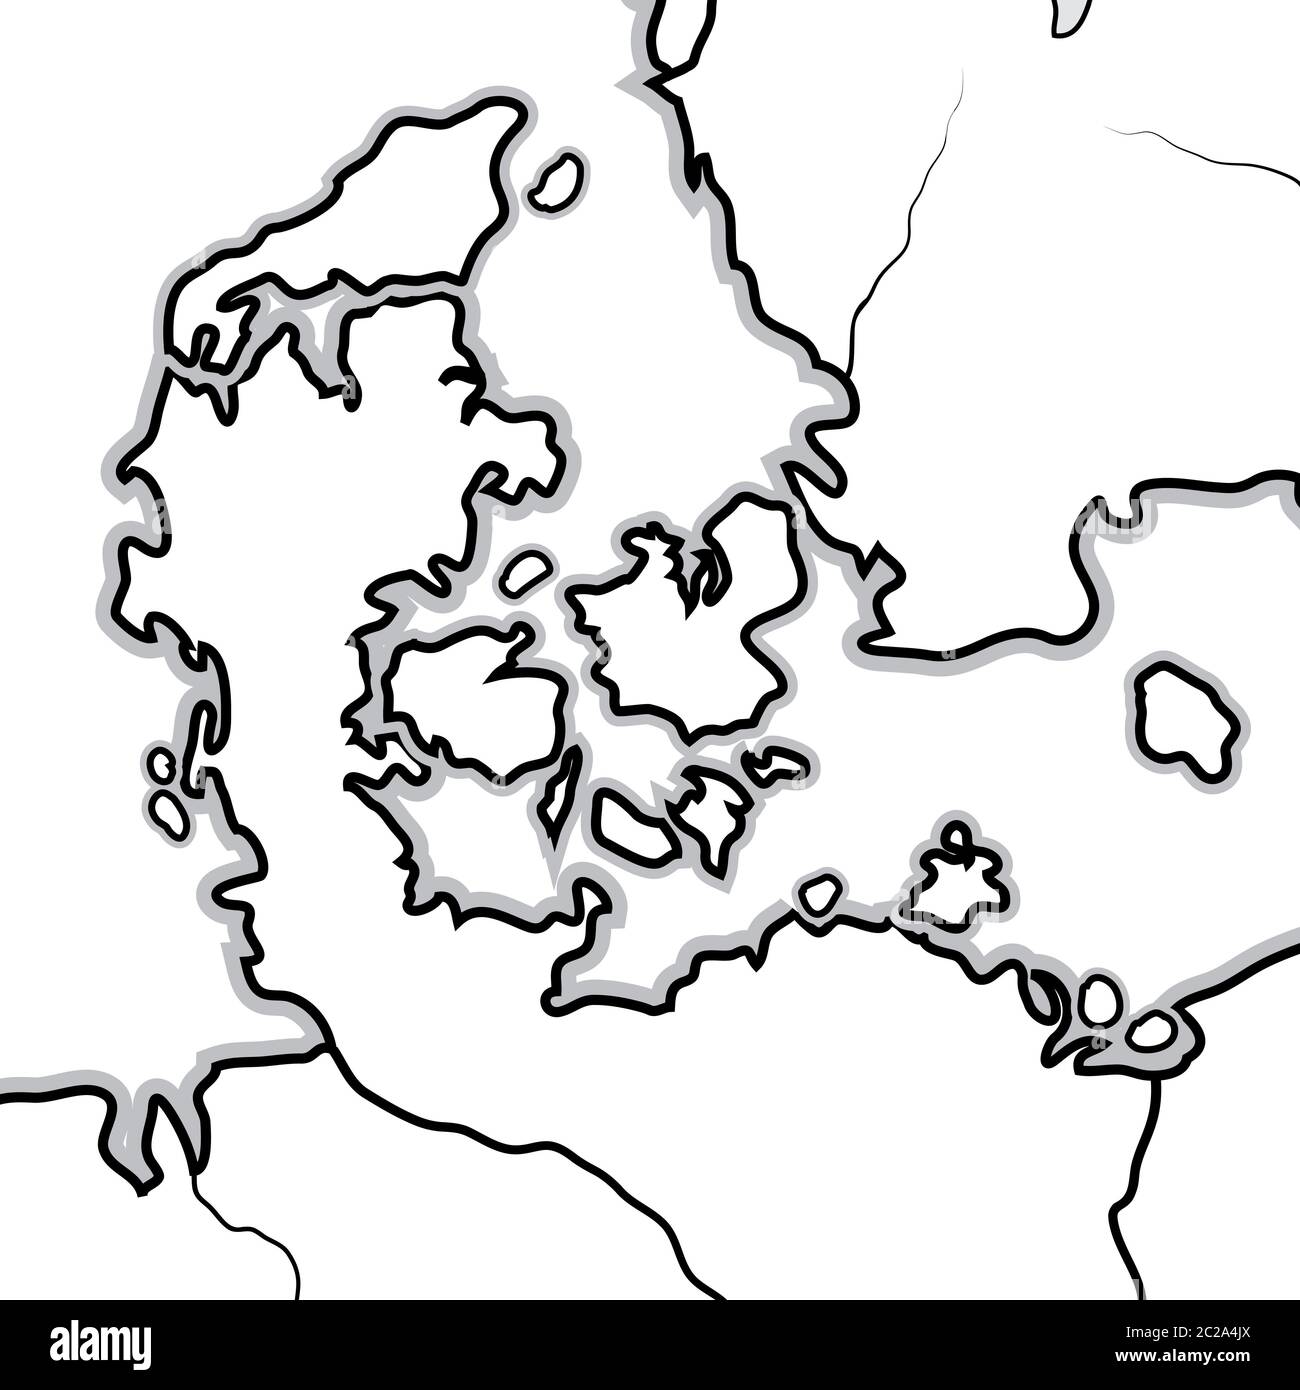 Weltkarte von DÄNEMARK: Dänemark, Jütland, Seeland, Skandinavien, Nordeuropa, Nordsee. Geografische Karte. Stockfoto